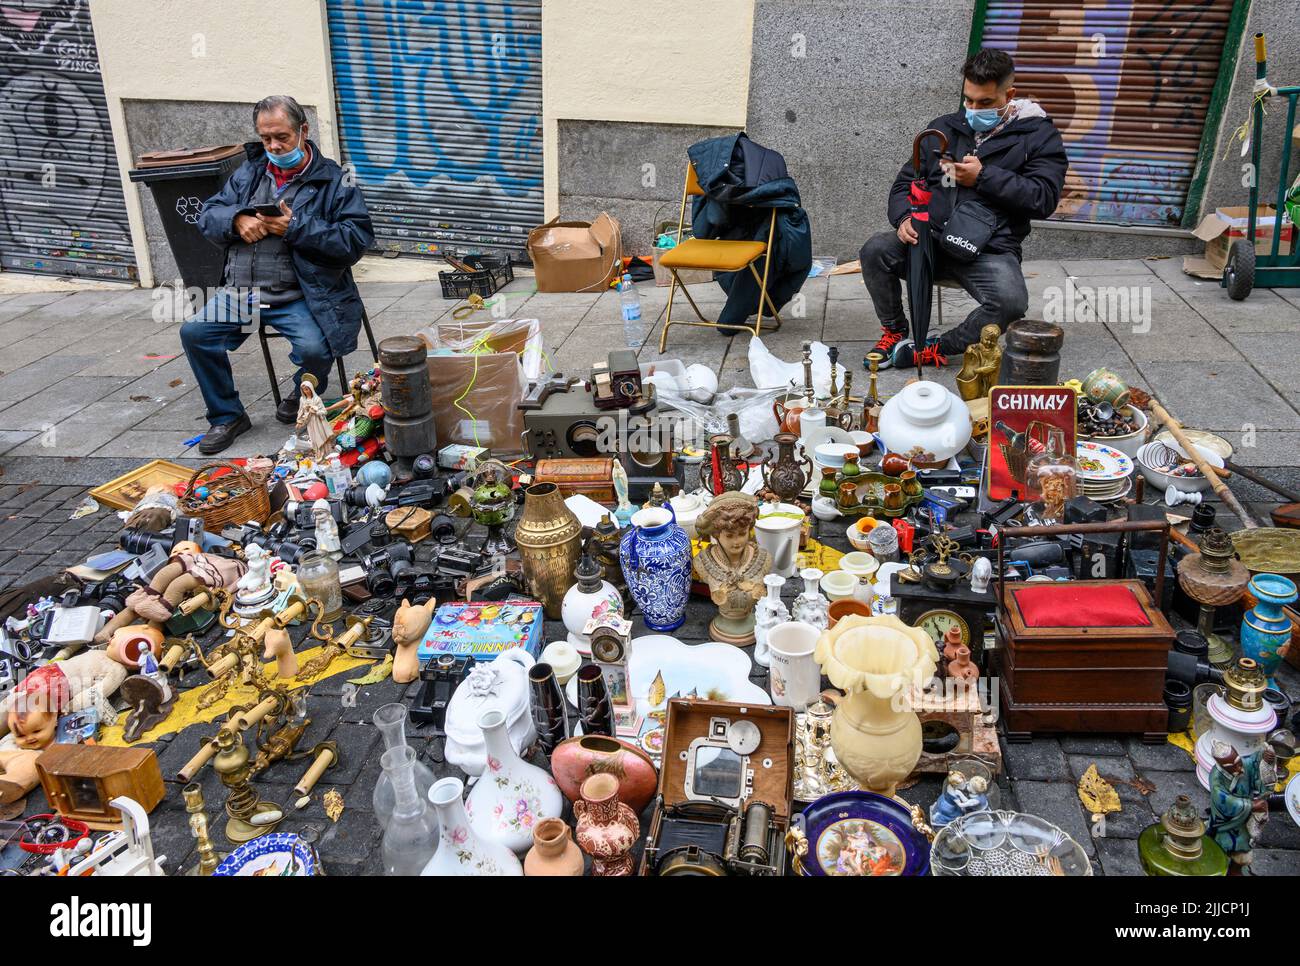 Antiques and bric-a-brac on sale in the Rastro flea market around the Plaza de Cascorro between La Latina and Embajadores,  Madrid, Spain. Stock Photo